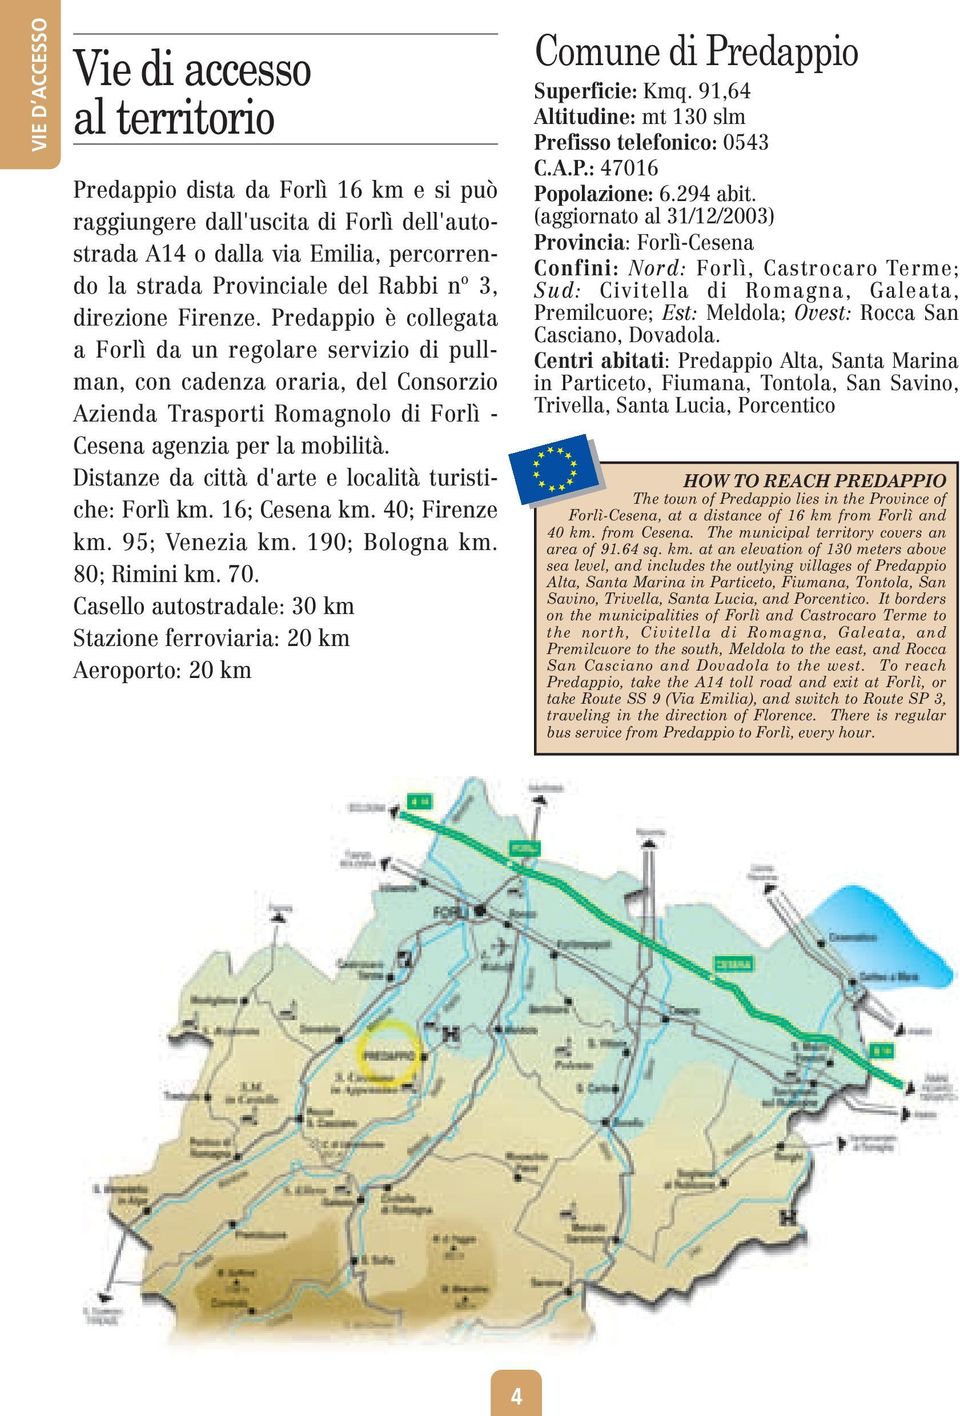 Distanze da città d'arte e località turistiche: Forlì km. 16; Cesena km. 40; Firenze km. 95; Venezia km. 190; Bologna km. 80; Rimini km. 70.